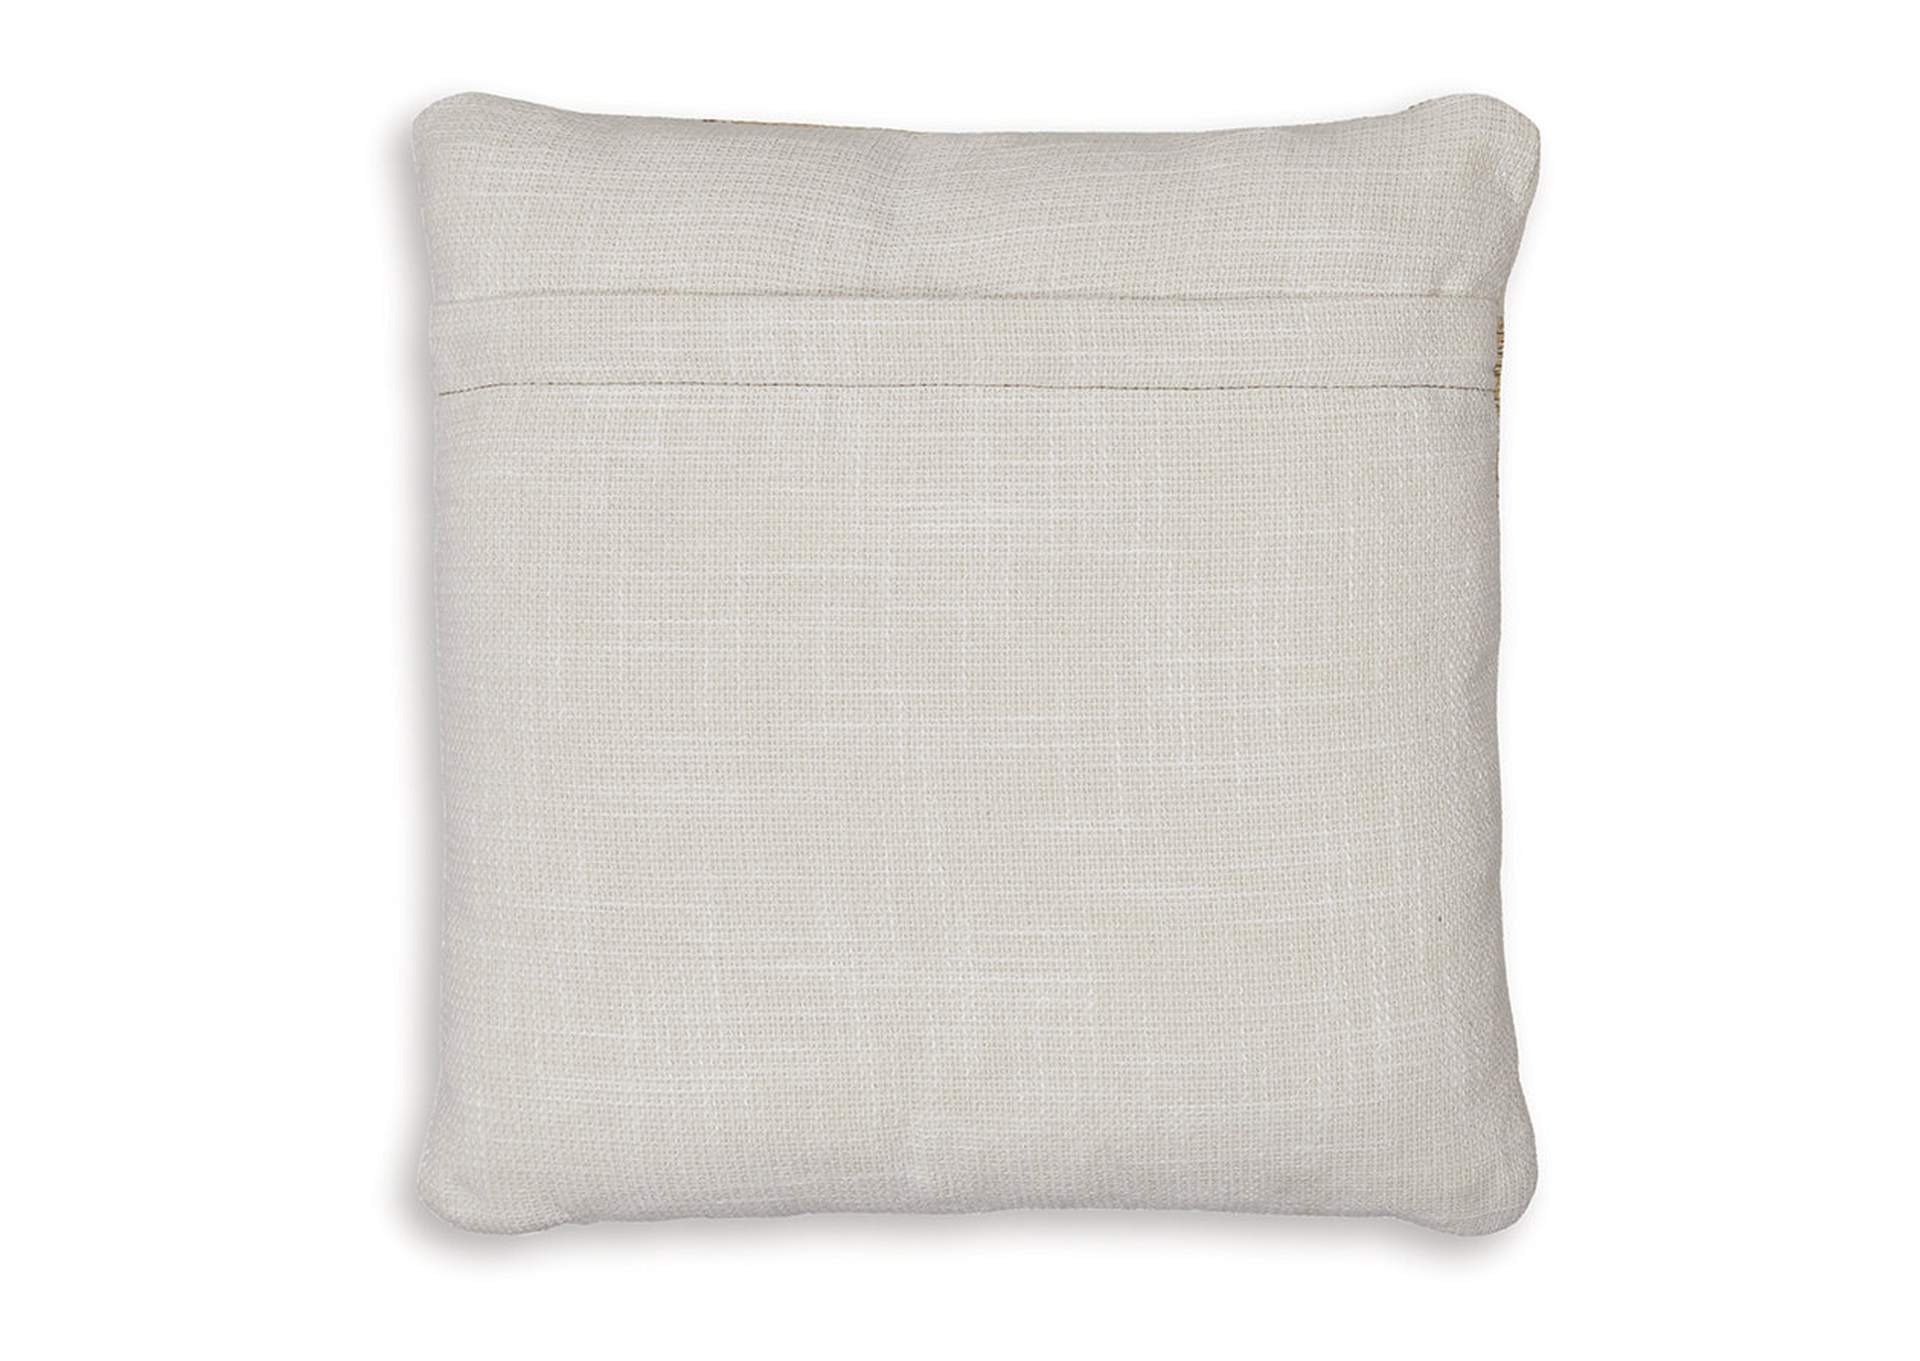 Brockner Next-Gen Nuvella Pillow,Signature Design By Ashley